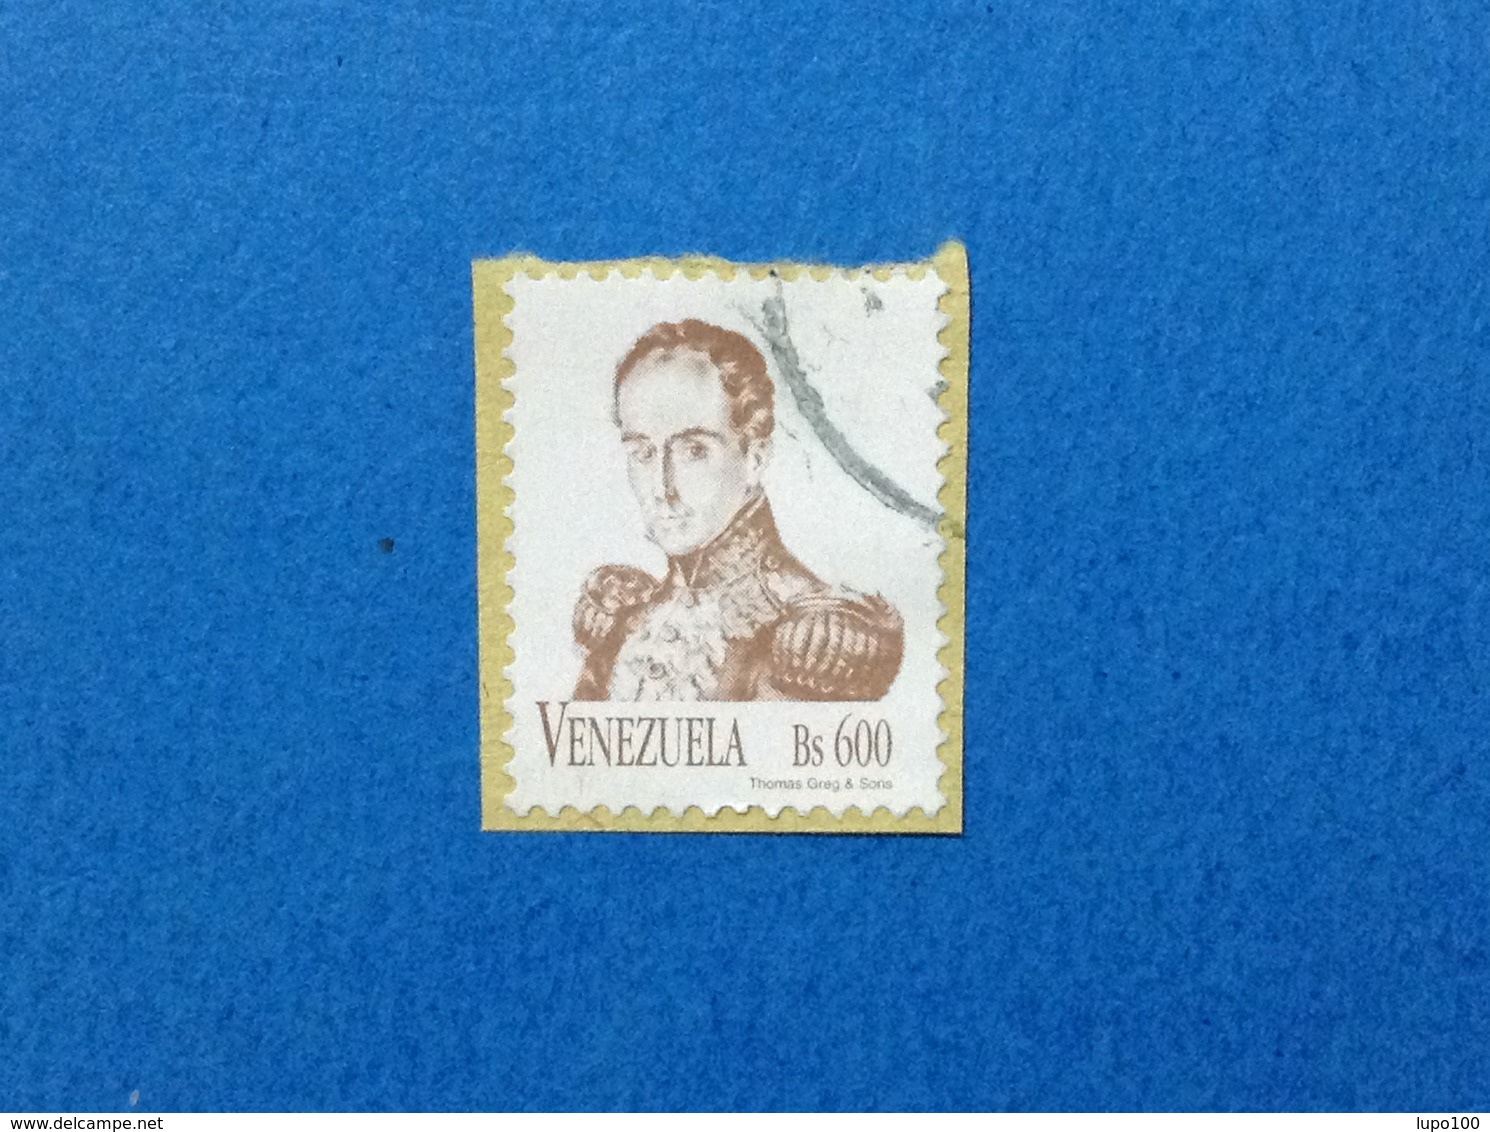 1997 VENEZUELA FRANCOBOLLO USATO STAMP USED ORDINARIO 600 BS - Venezuela